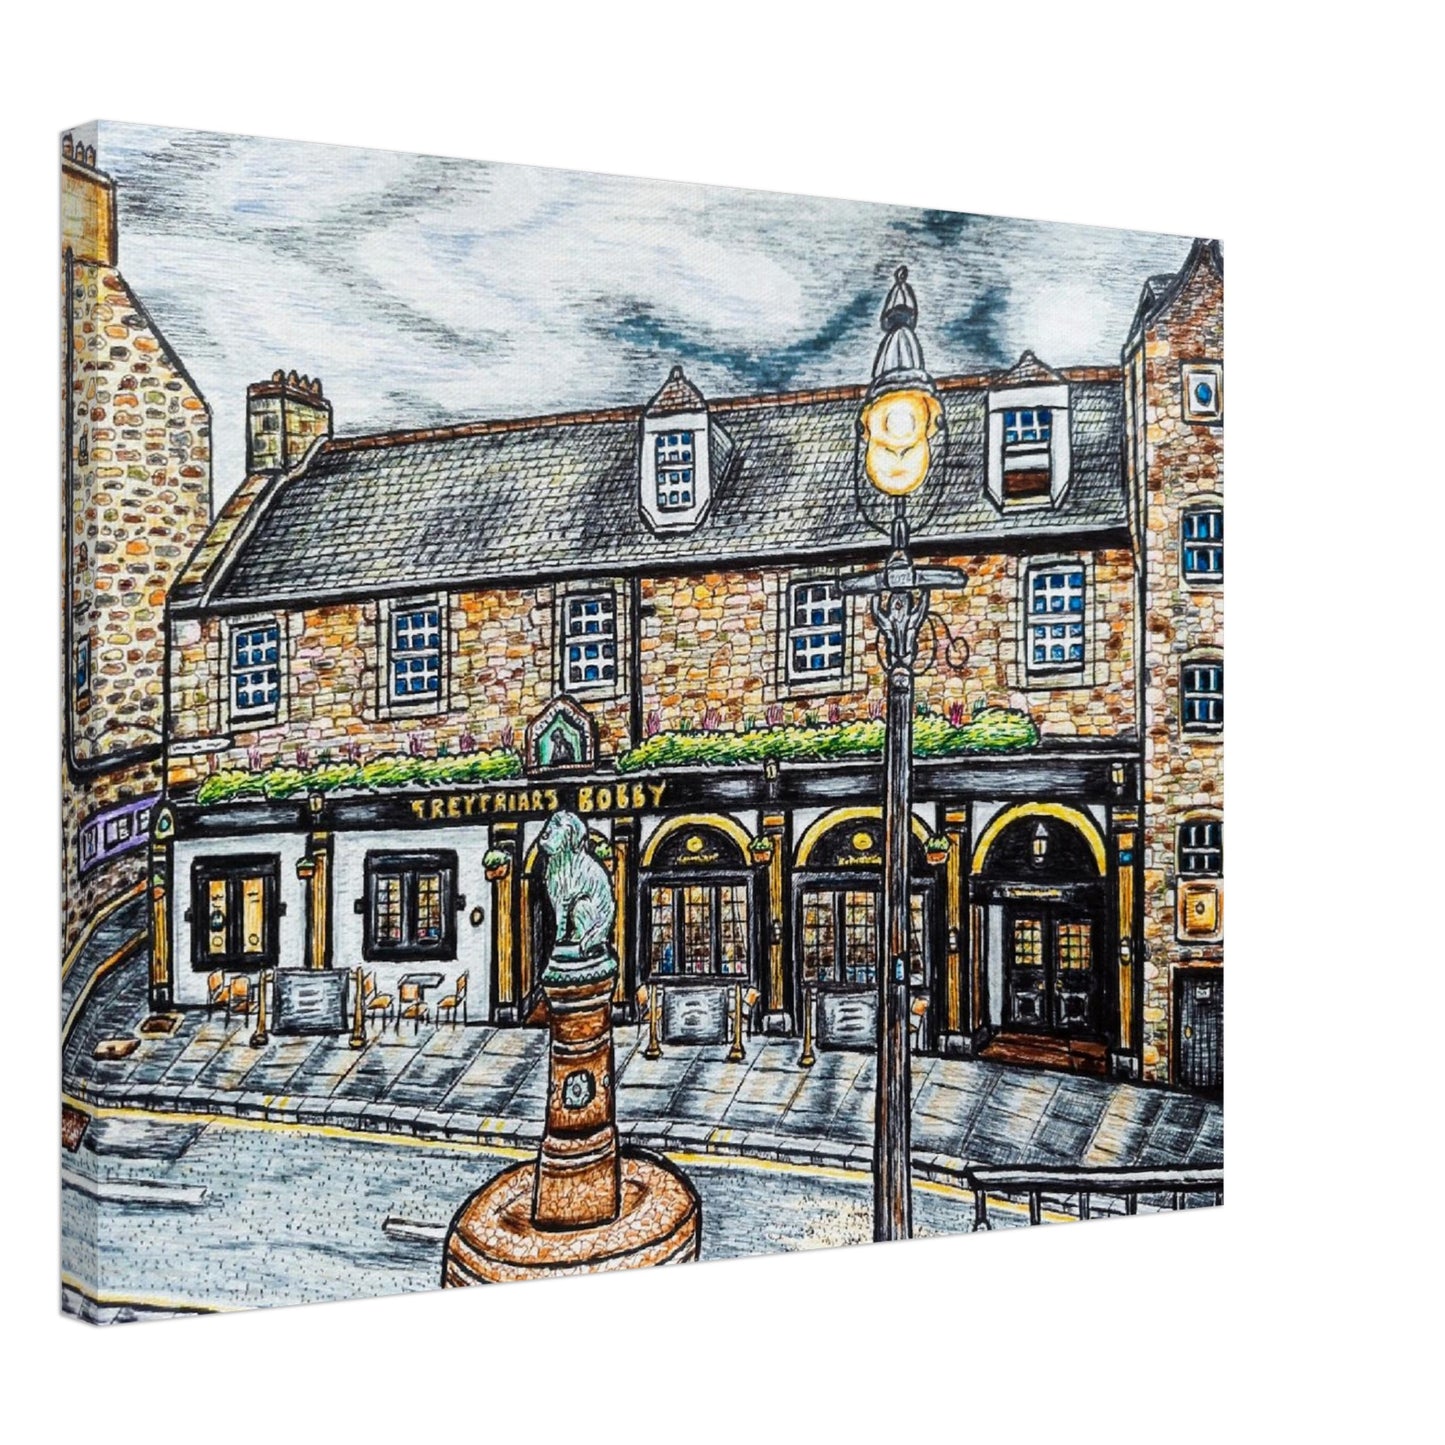 Edinburgh Greyfriar's Bobby Canvas Print